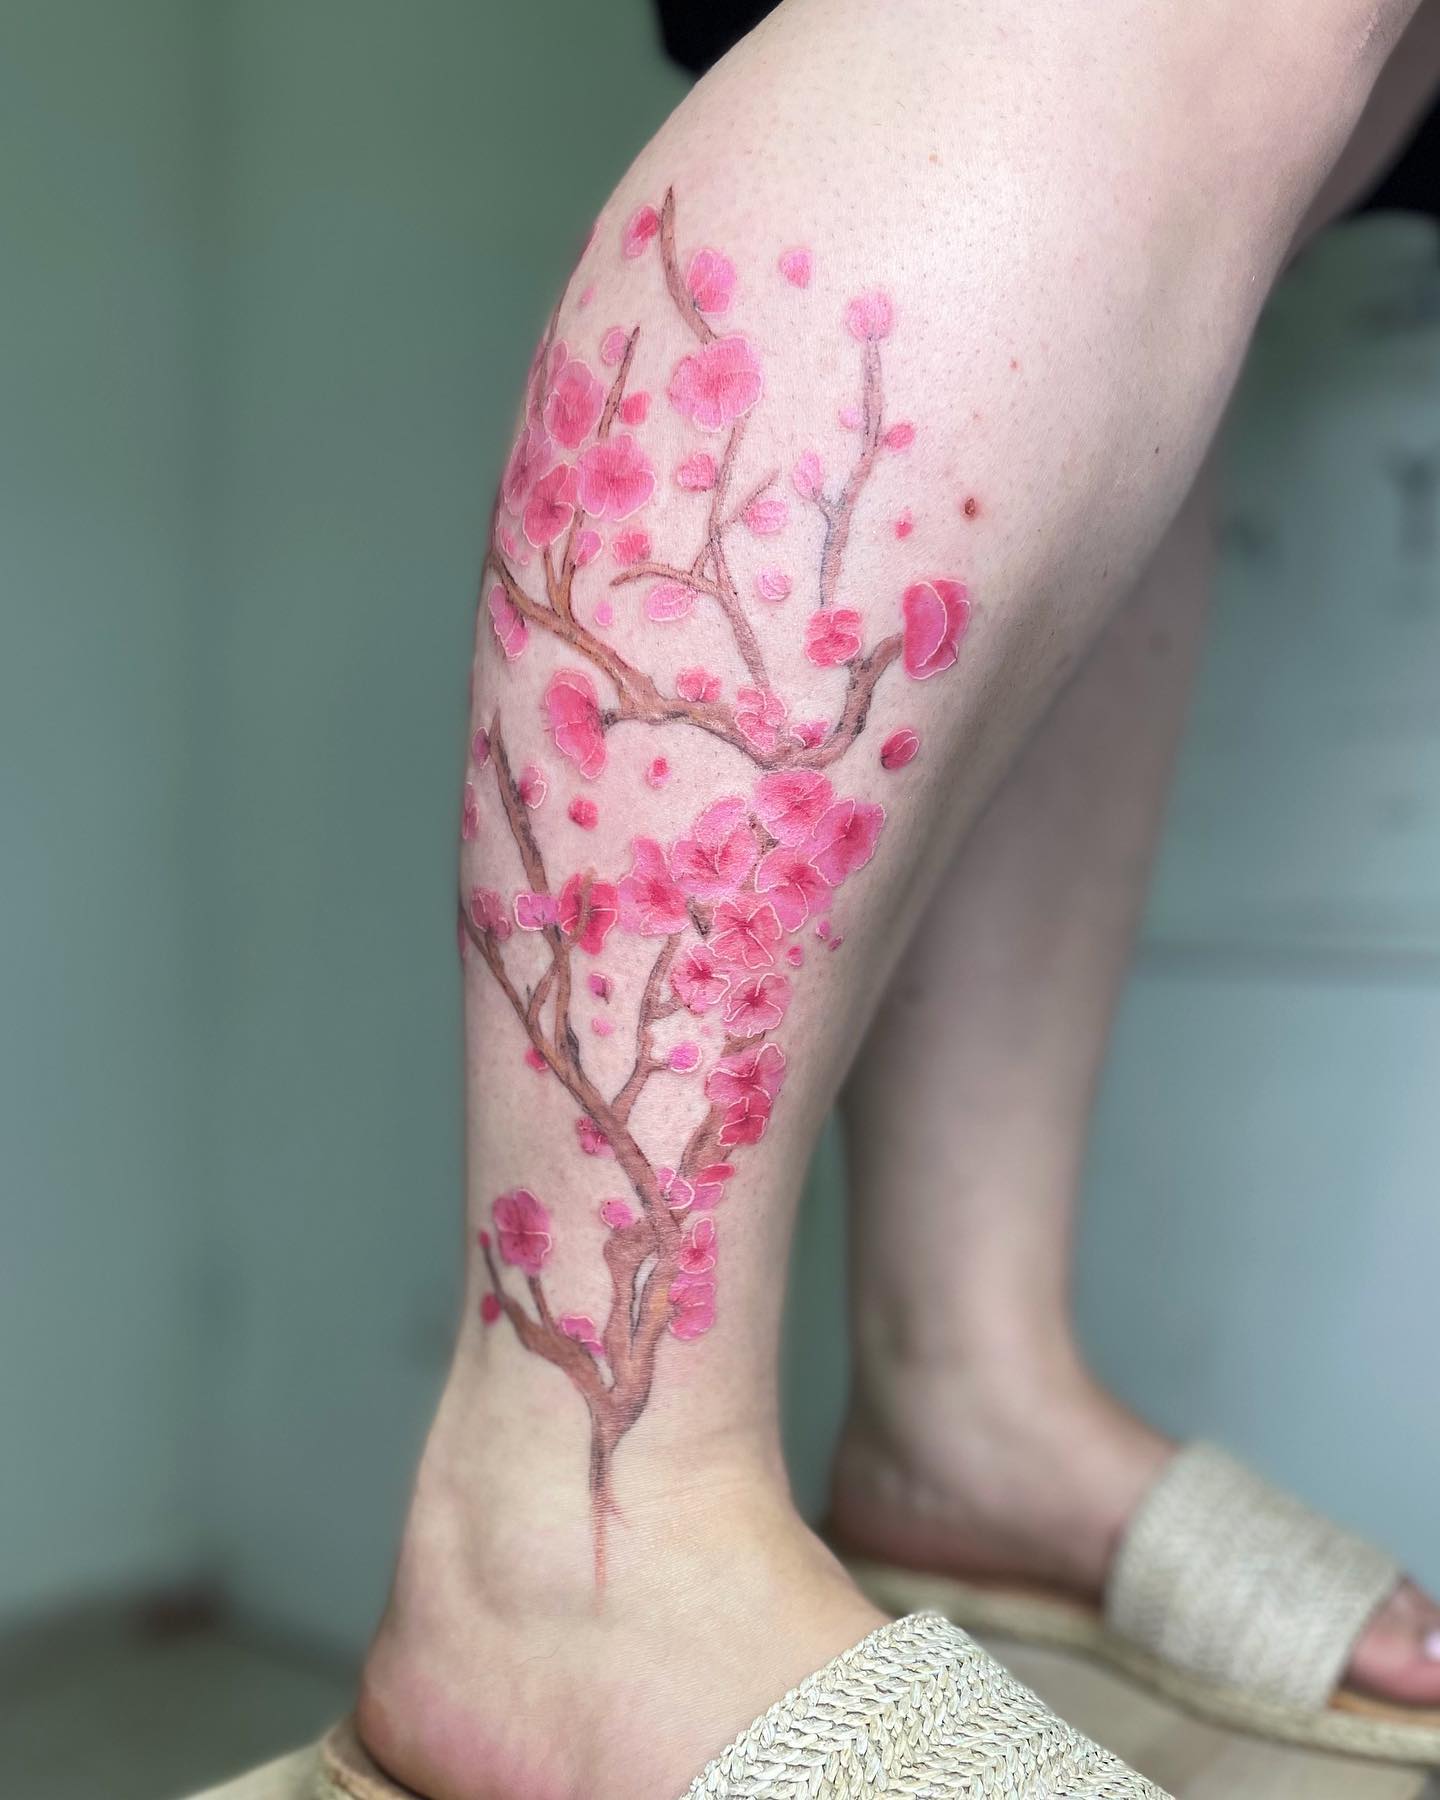 Tatuaje de flor de cerezo en la pierna.